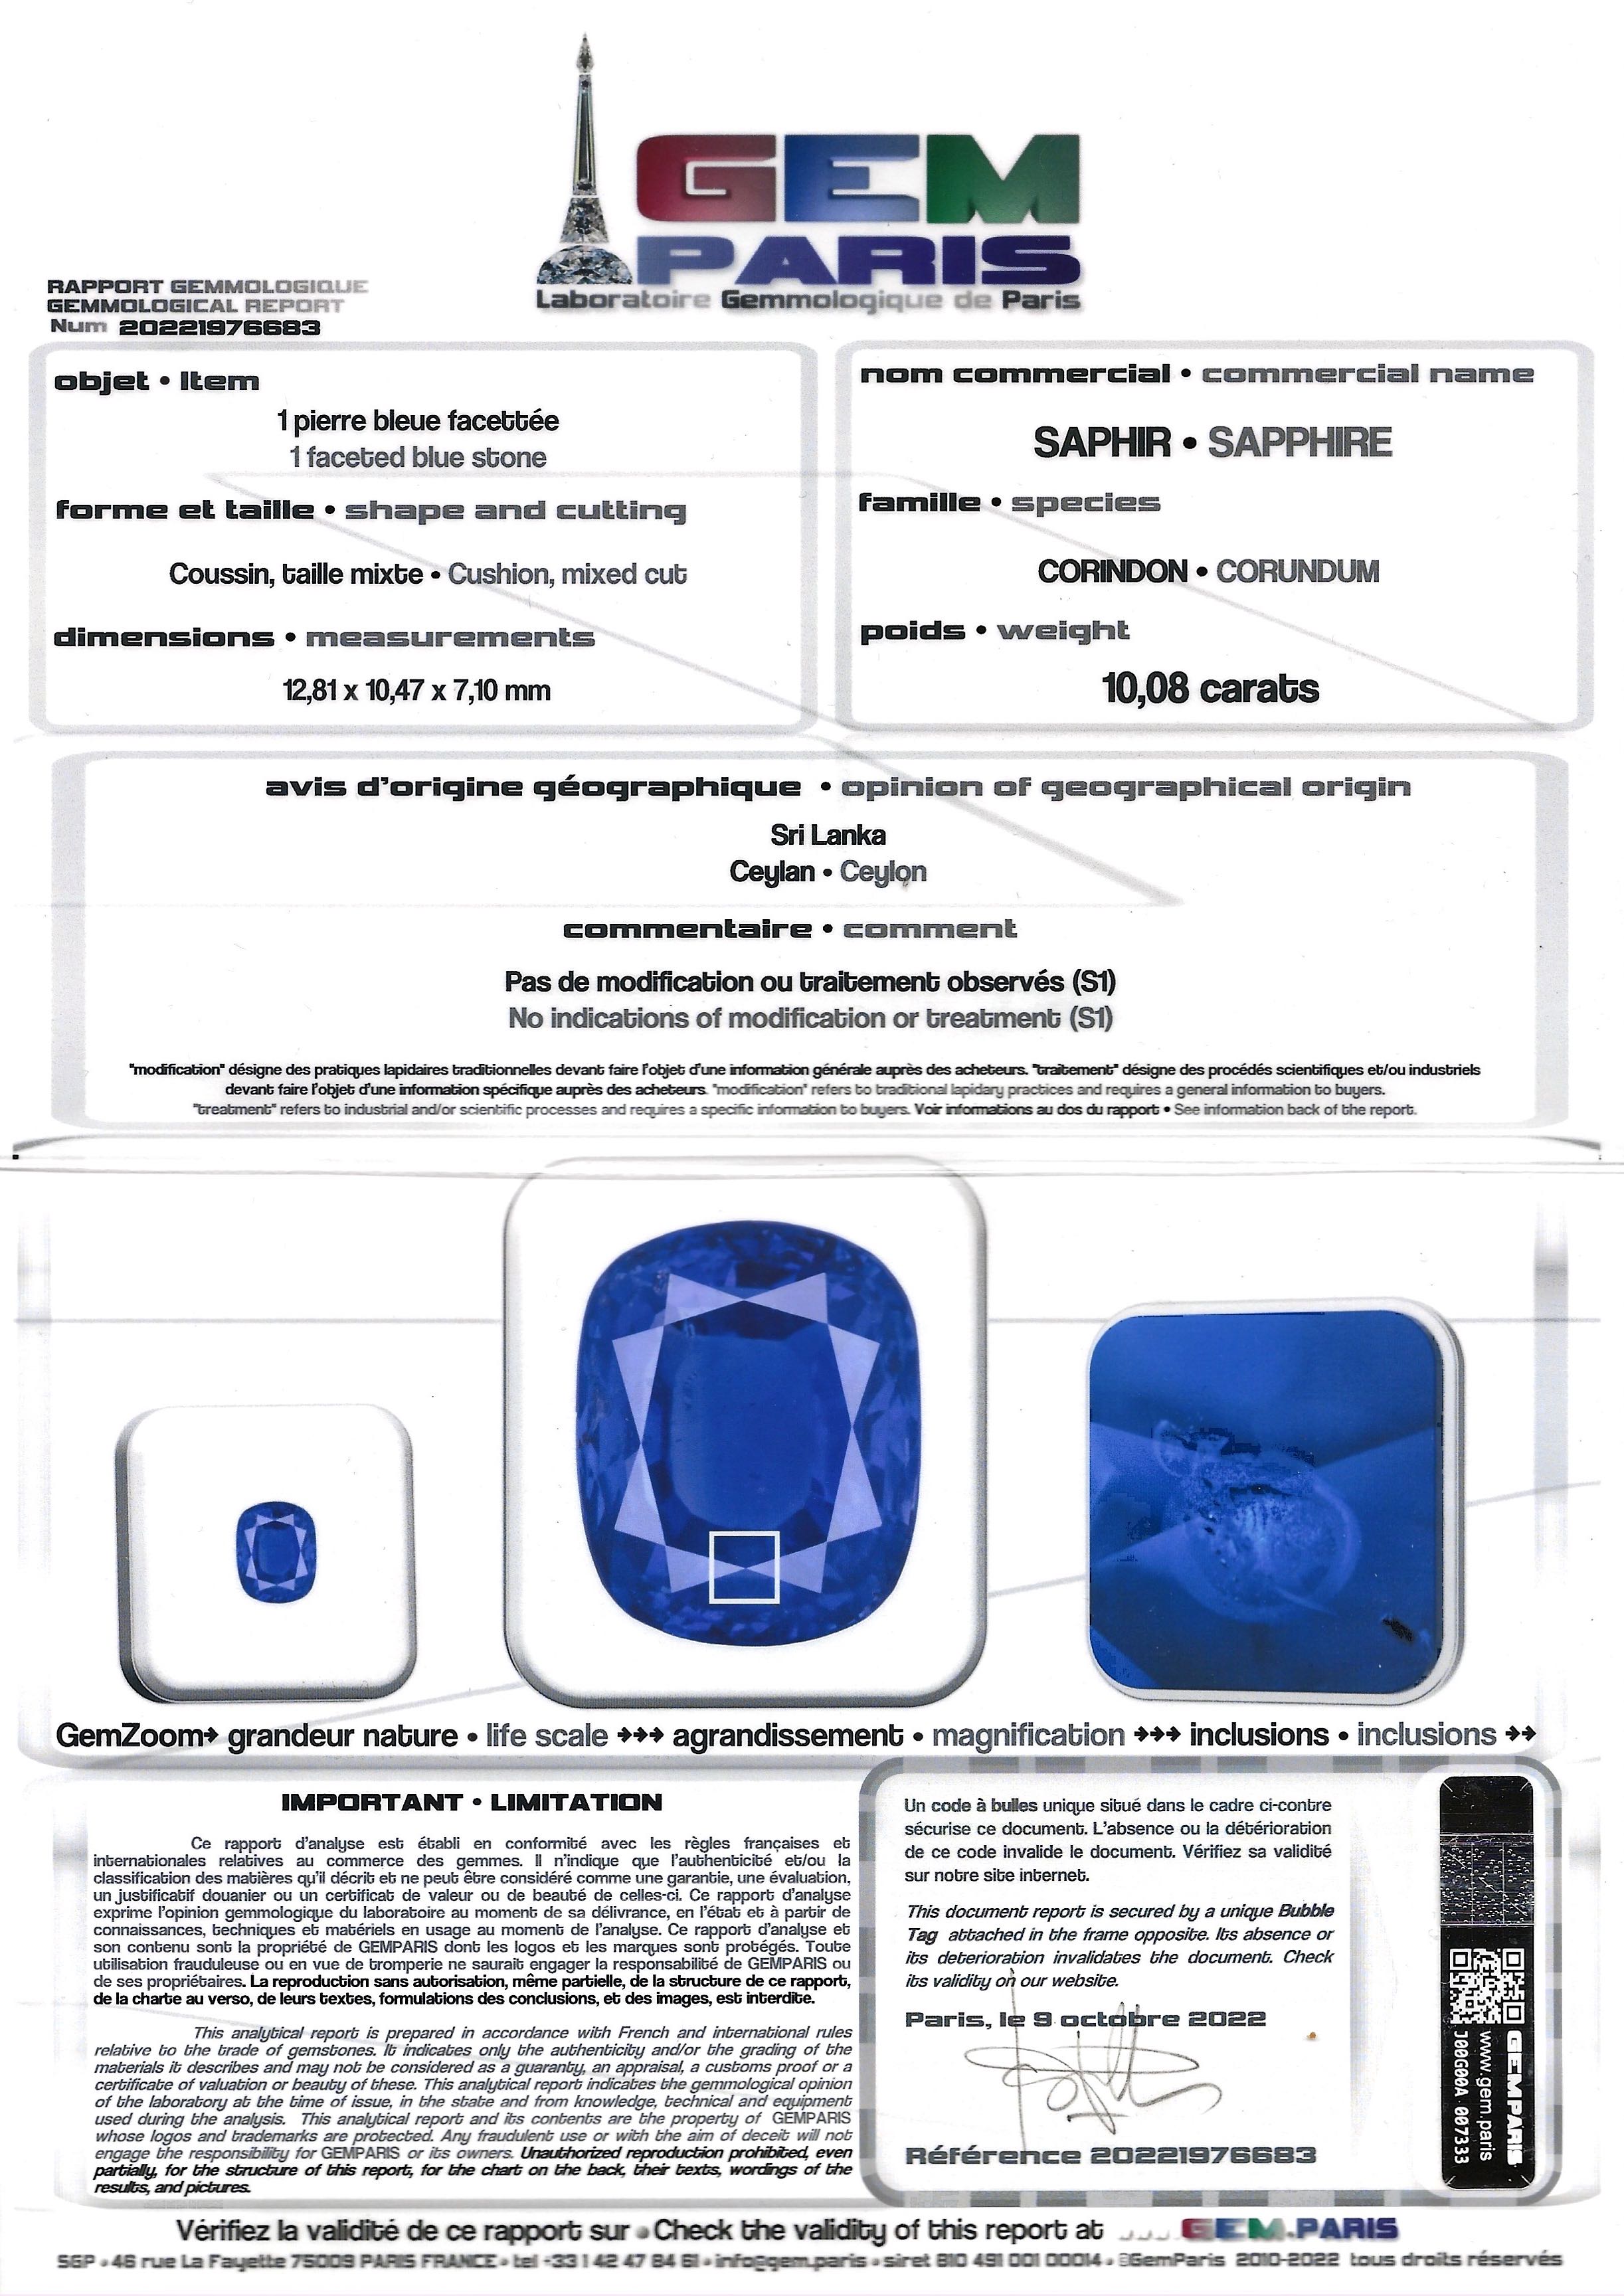 Unheated sapphire 10,08 carats (laboratory certificate) and diamond ring-3